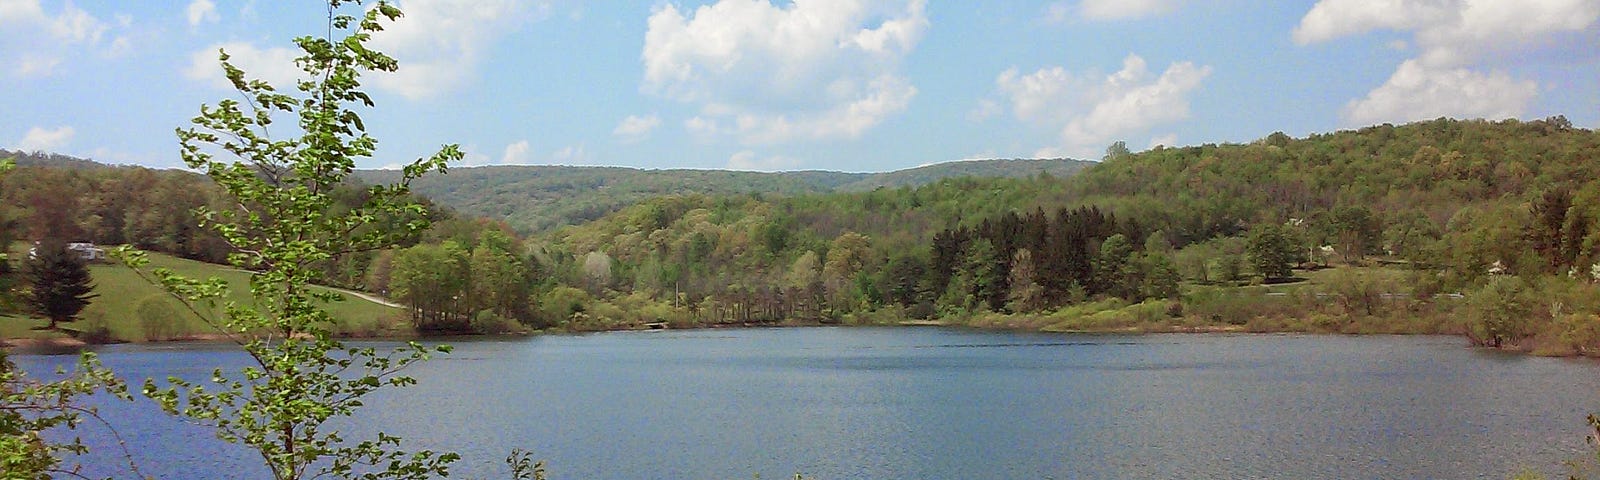 Reservoir under sunny skies.